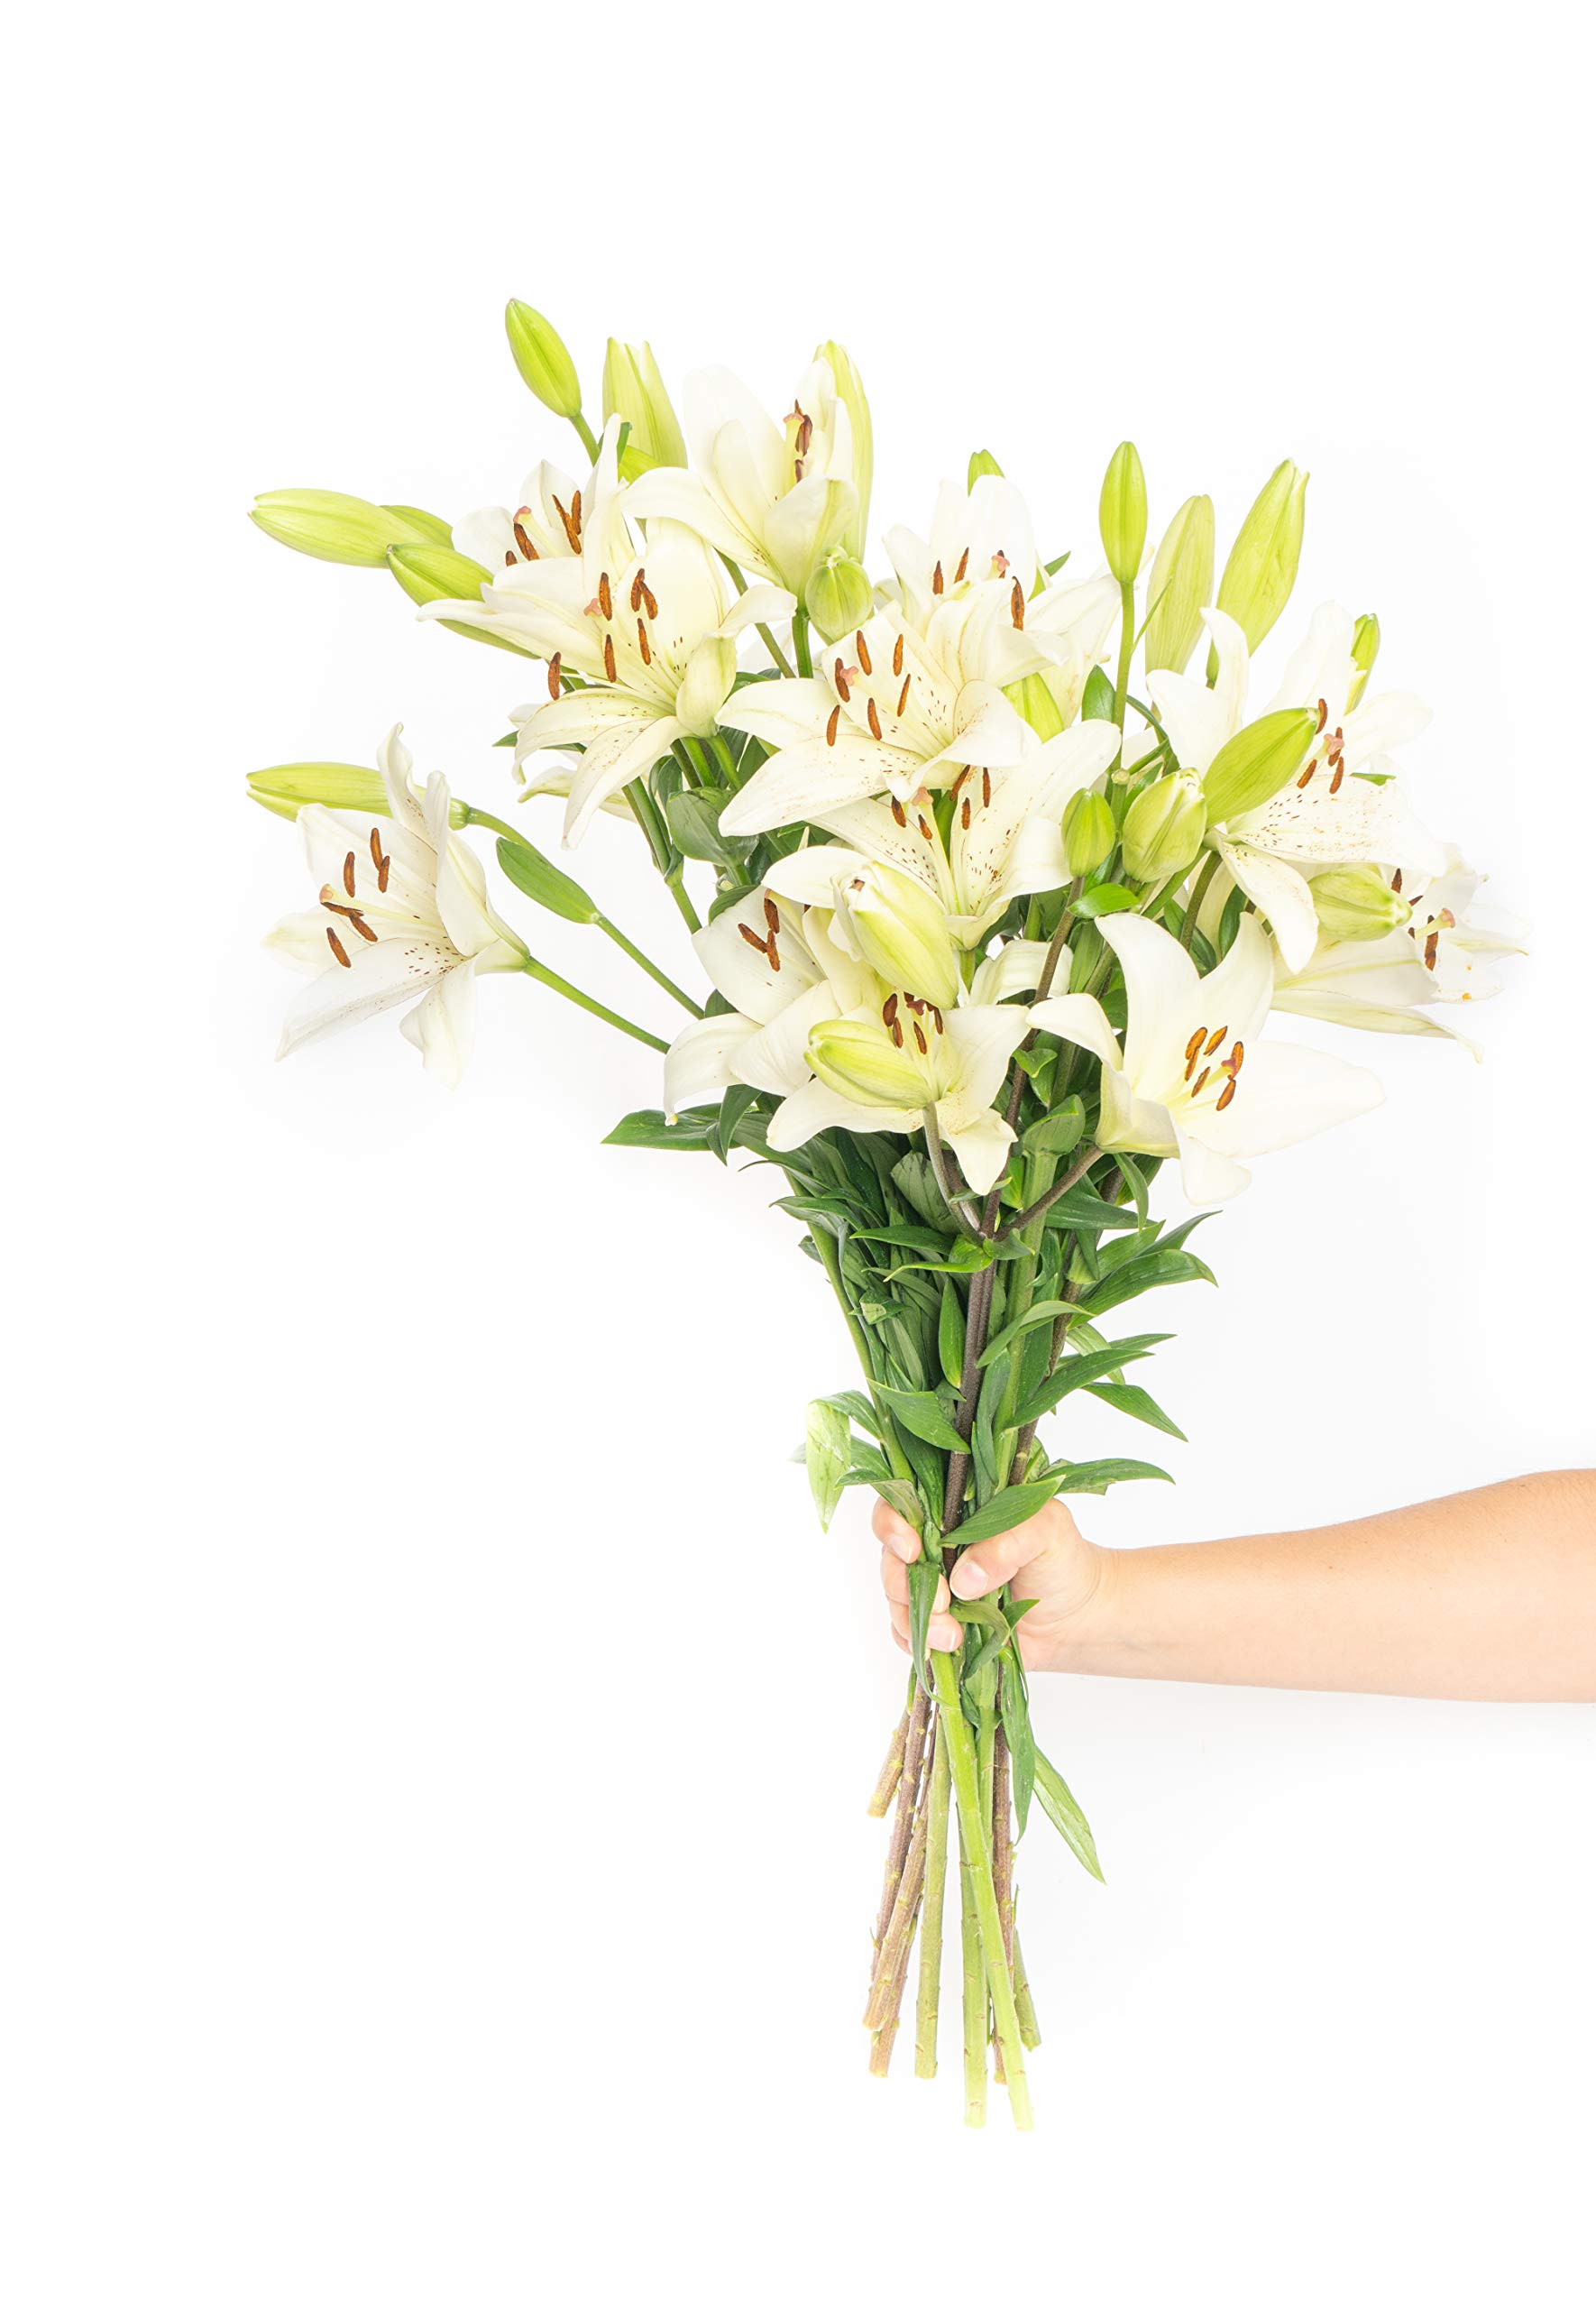 Greenchoice Flowers - Fresh Cut Lilies, Lilies Flowers, Lilies for Delivery, Fresh Flowers (White, 30 Blooms)